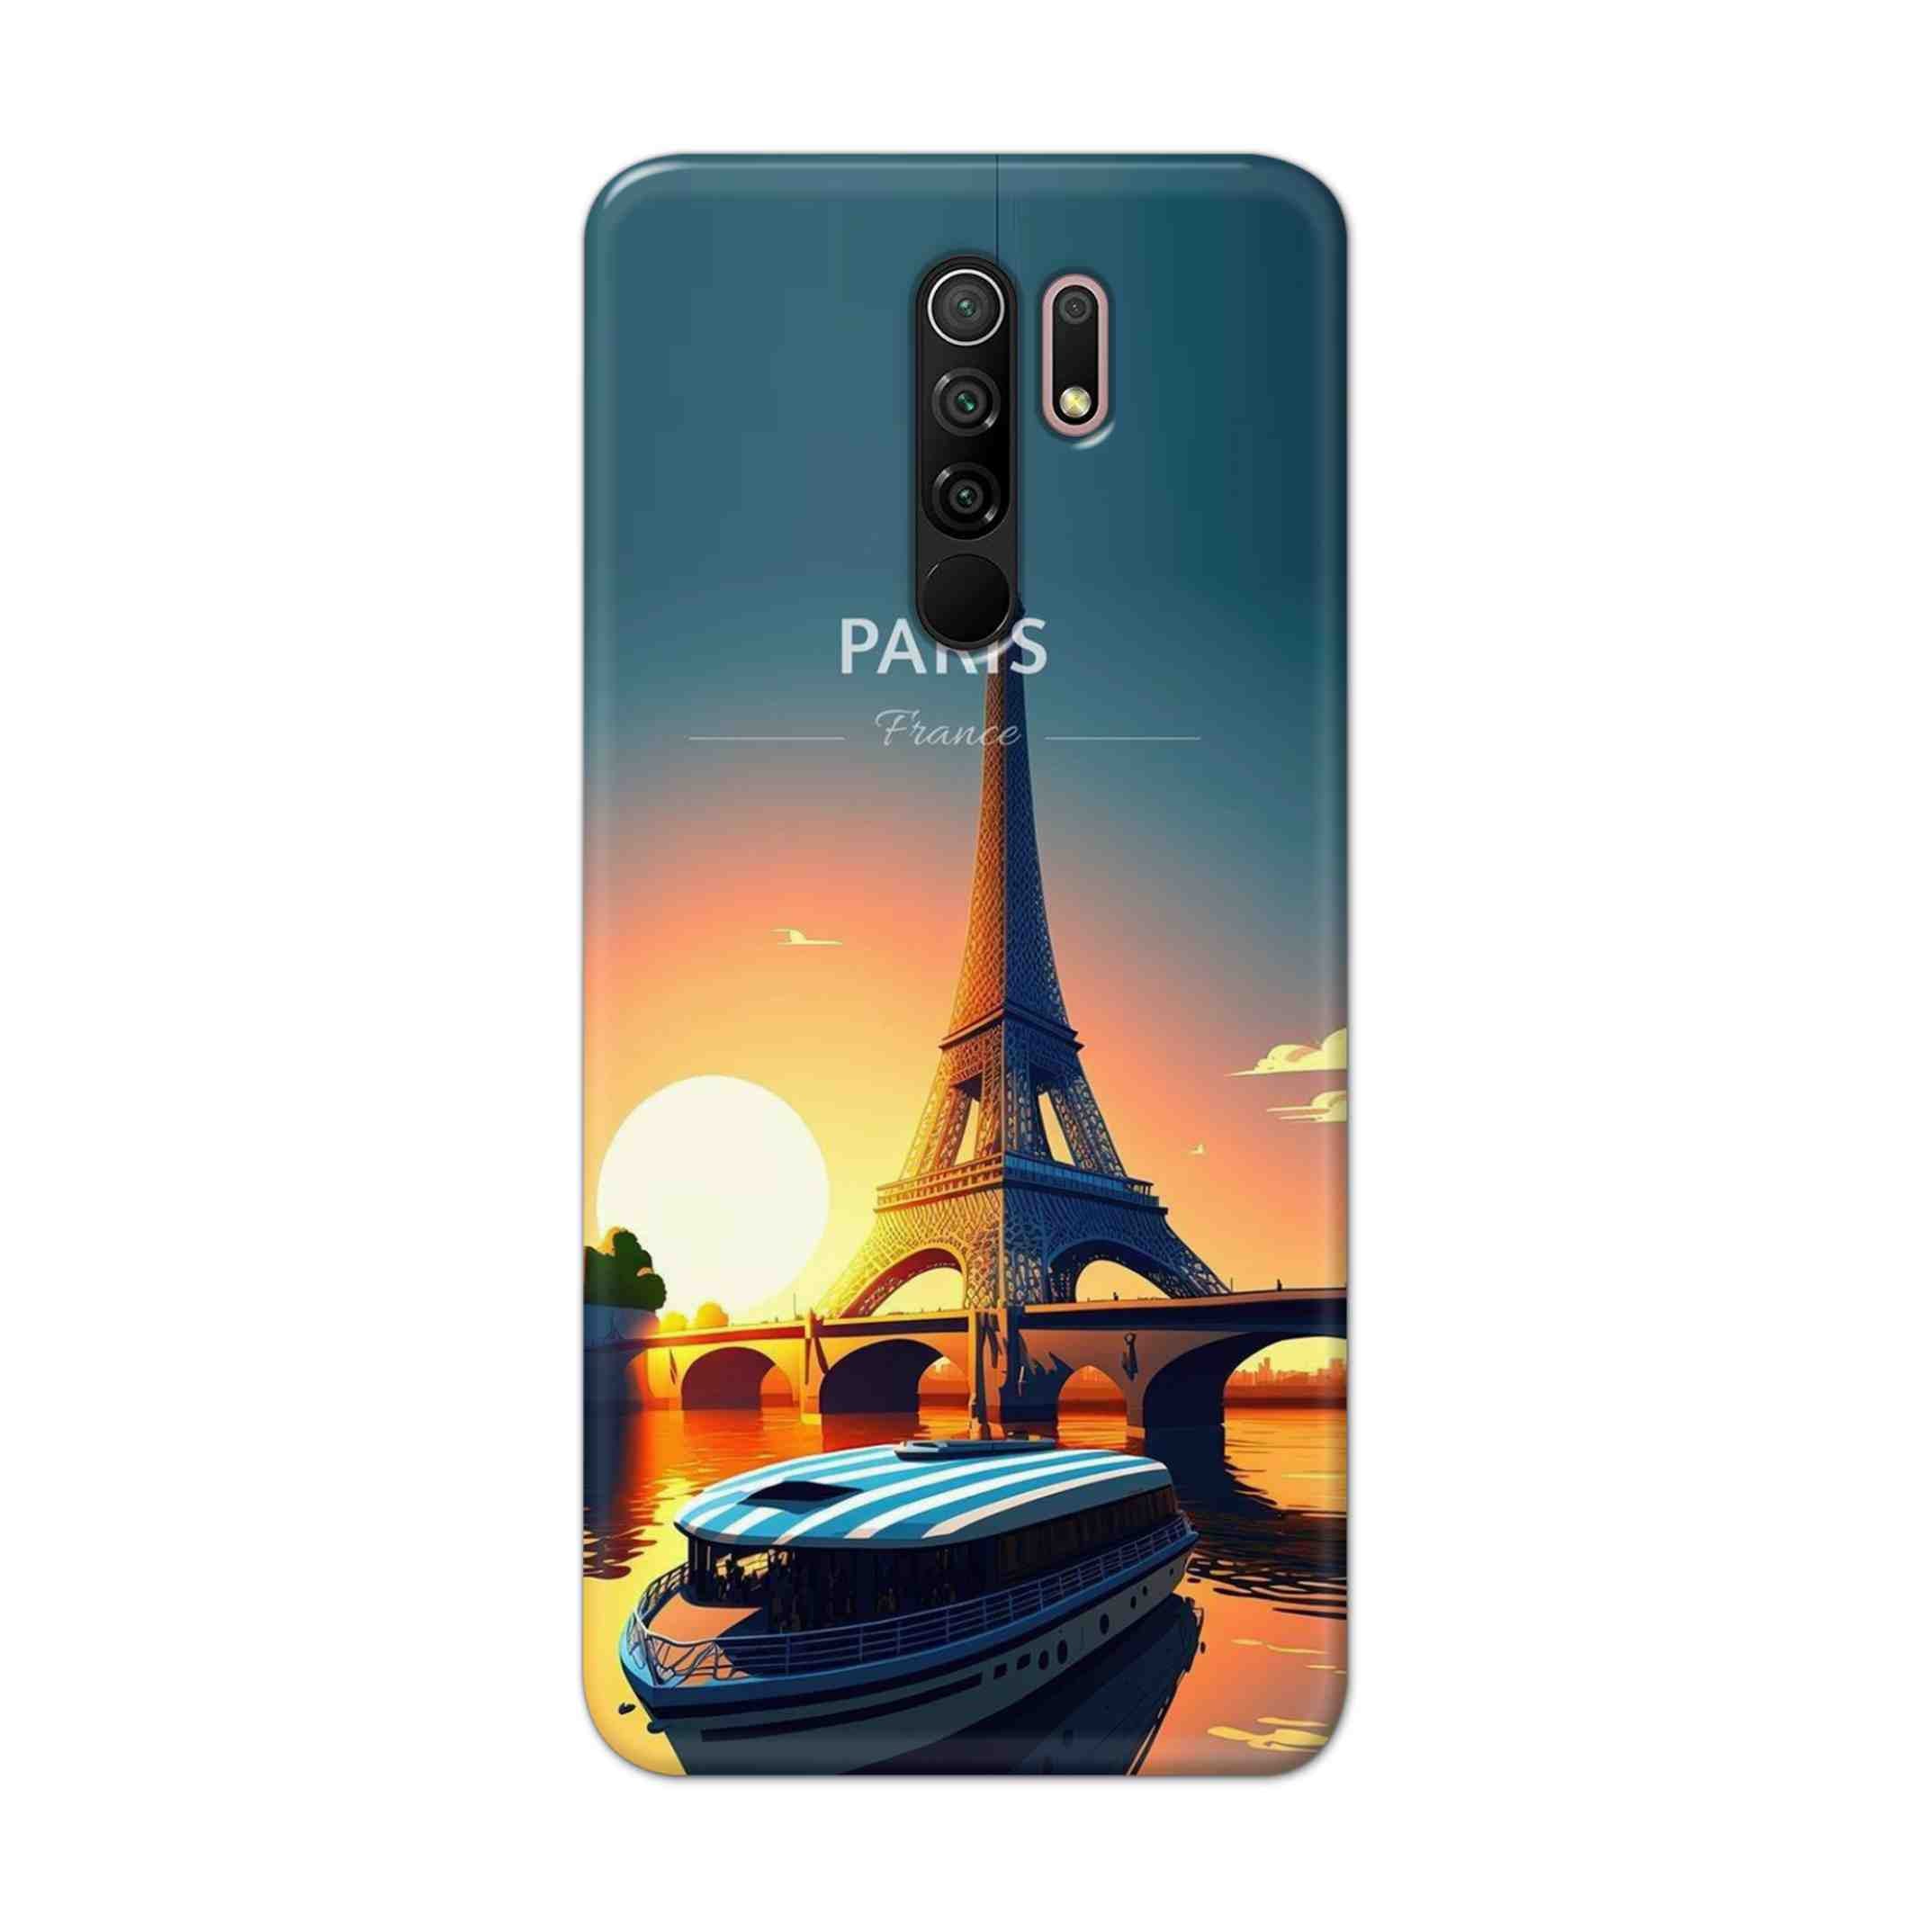 Buy France Hard Back Mobile Phone Case Cover For Xiaomi Redmi 9 Prime Online